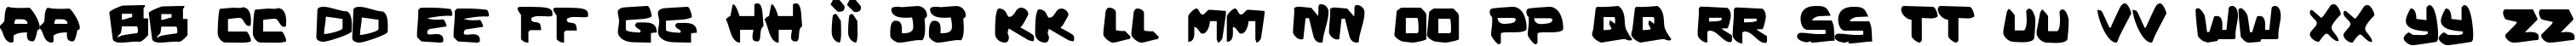 Пример написания английского алфавита шрифтом Kalystйrine